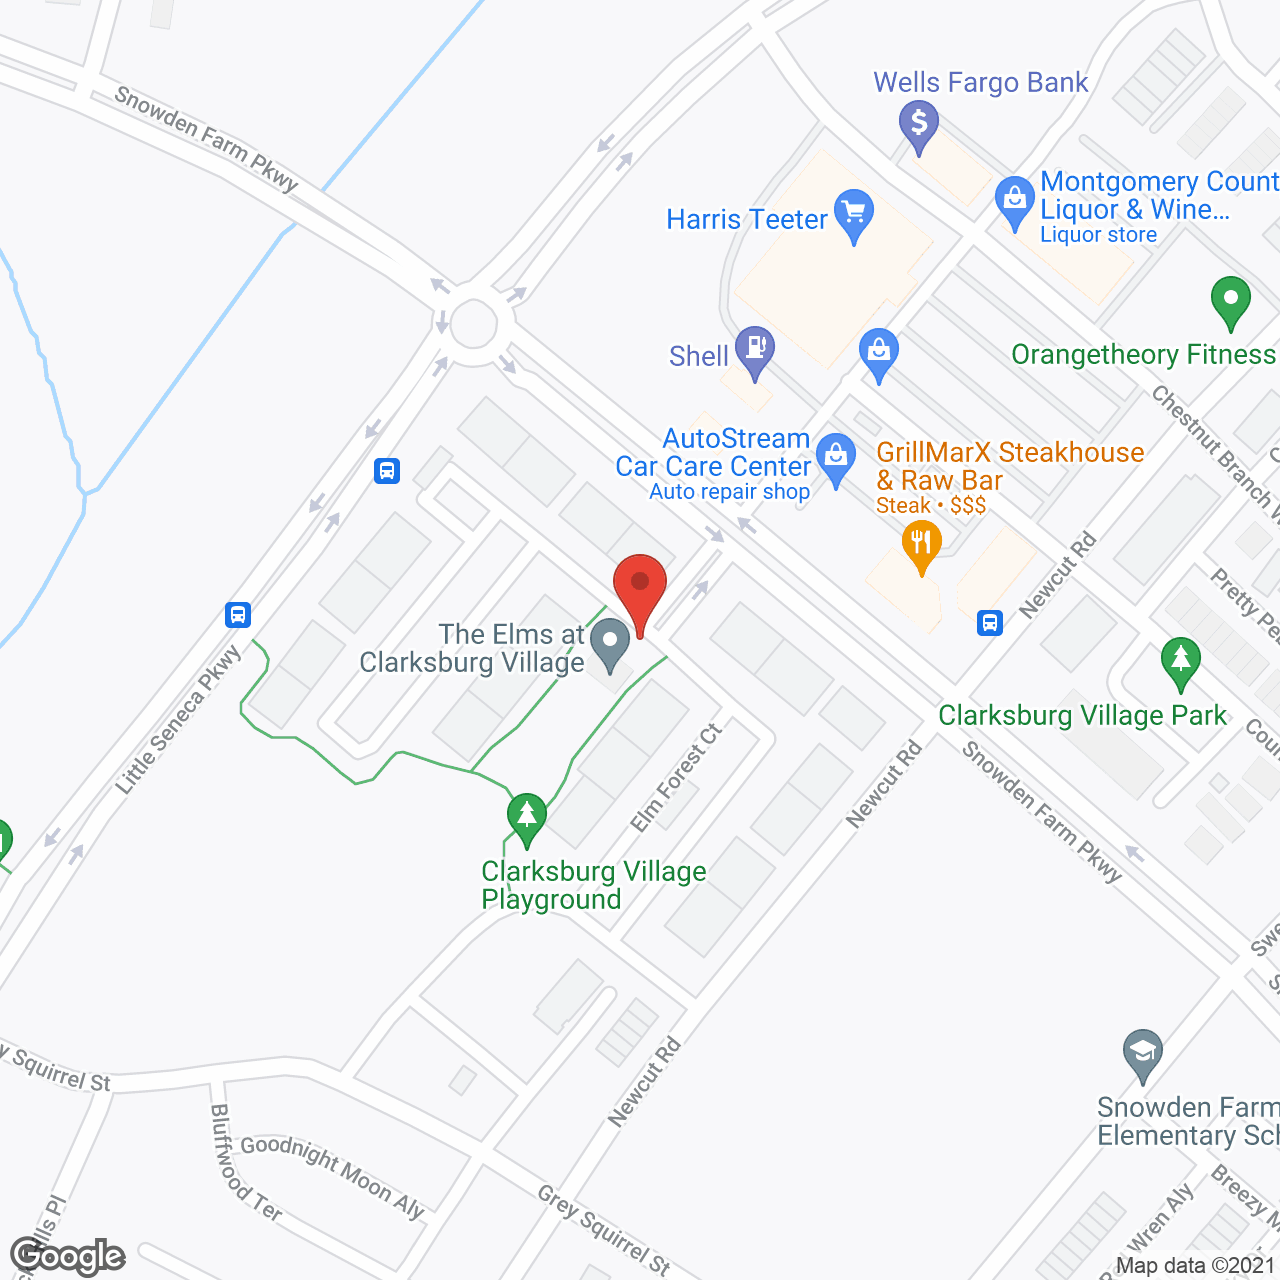 The Elms at Clarksburg Village - Encore in google map